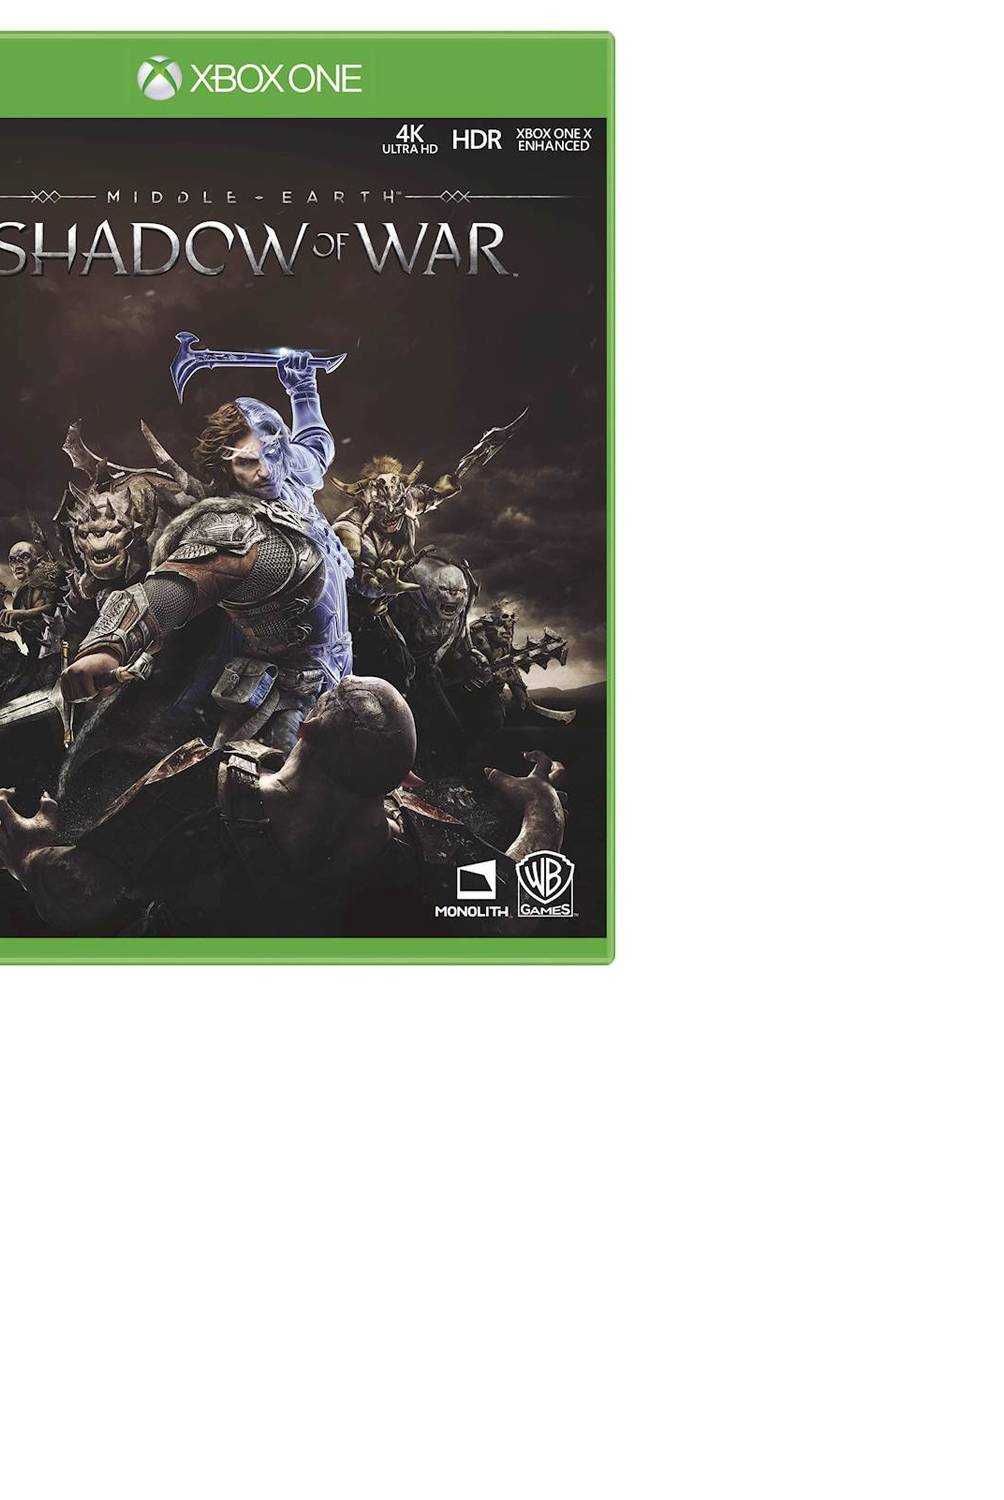 MICROSOFT - Microsoft Middle Earth Shadow Of War Xbox One